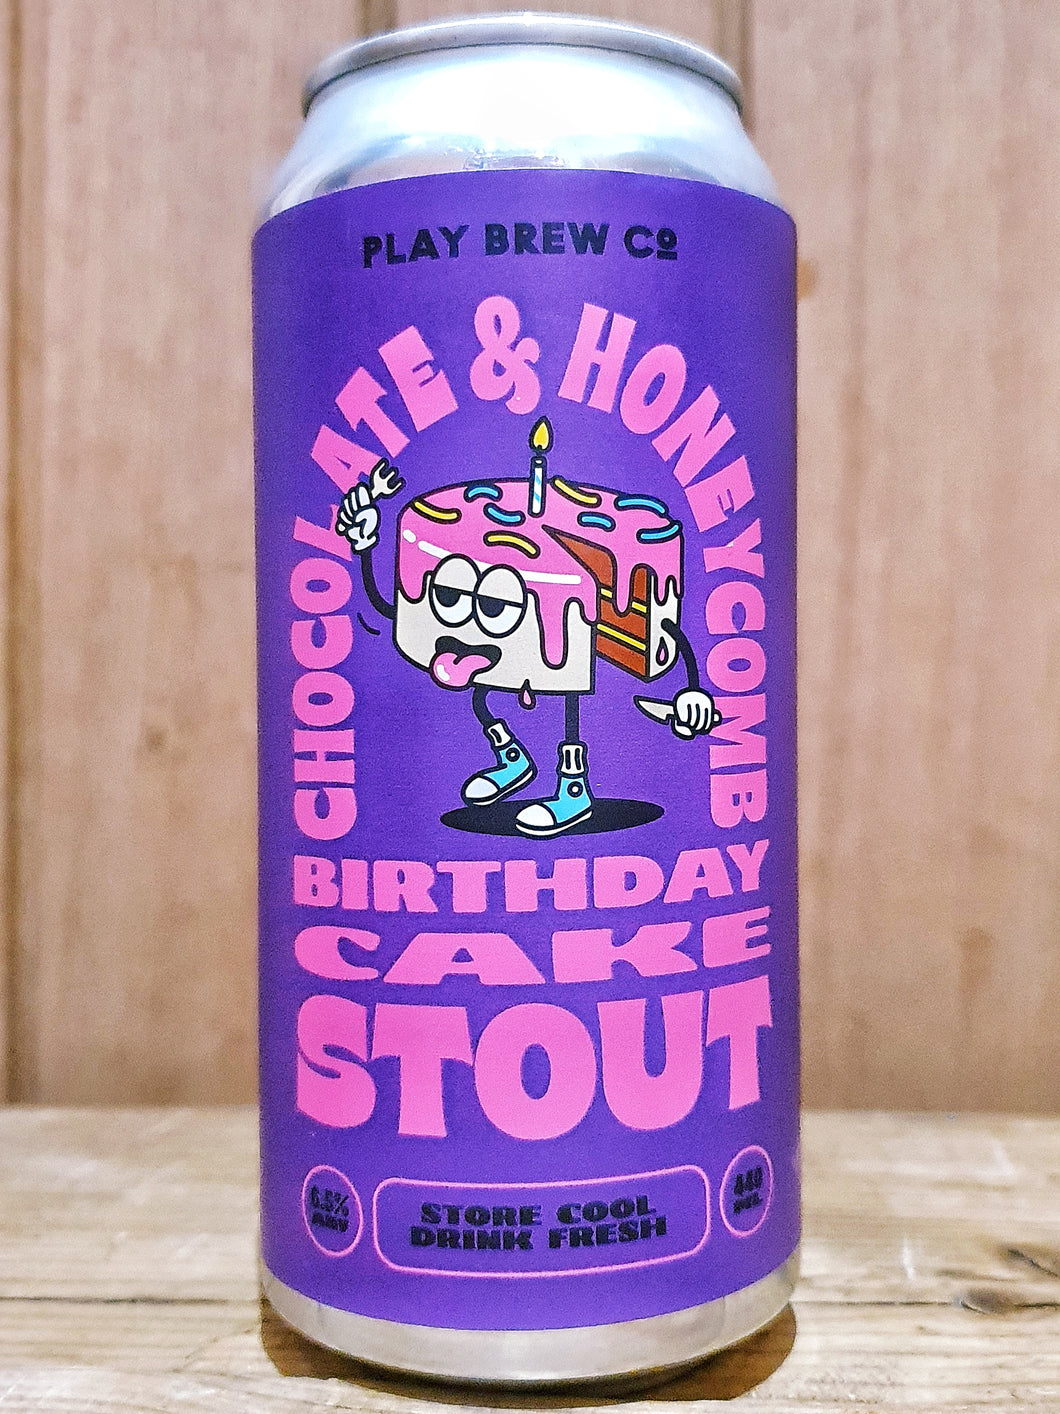 Play Brew Co - Chocolate & Honeycomb Birthday Cake Stout